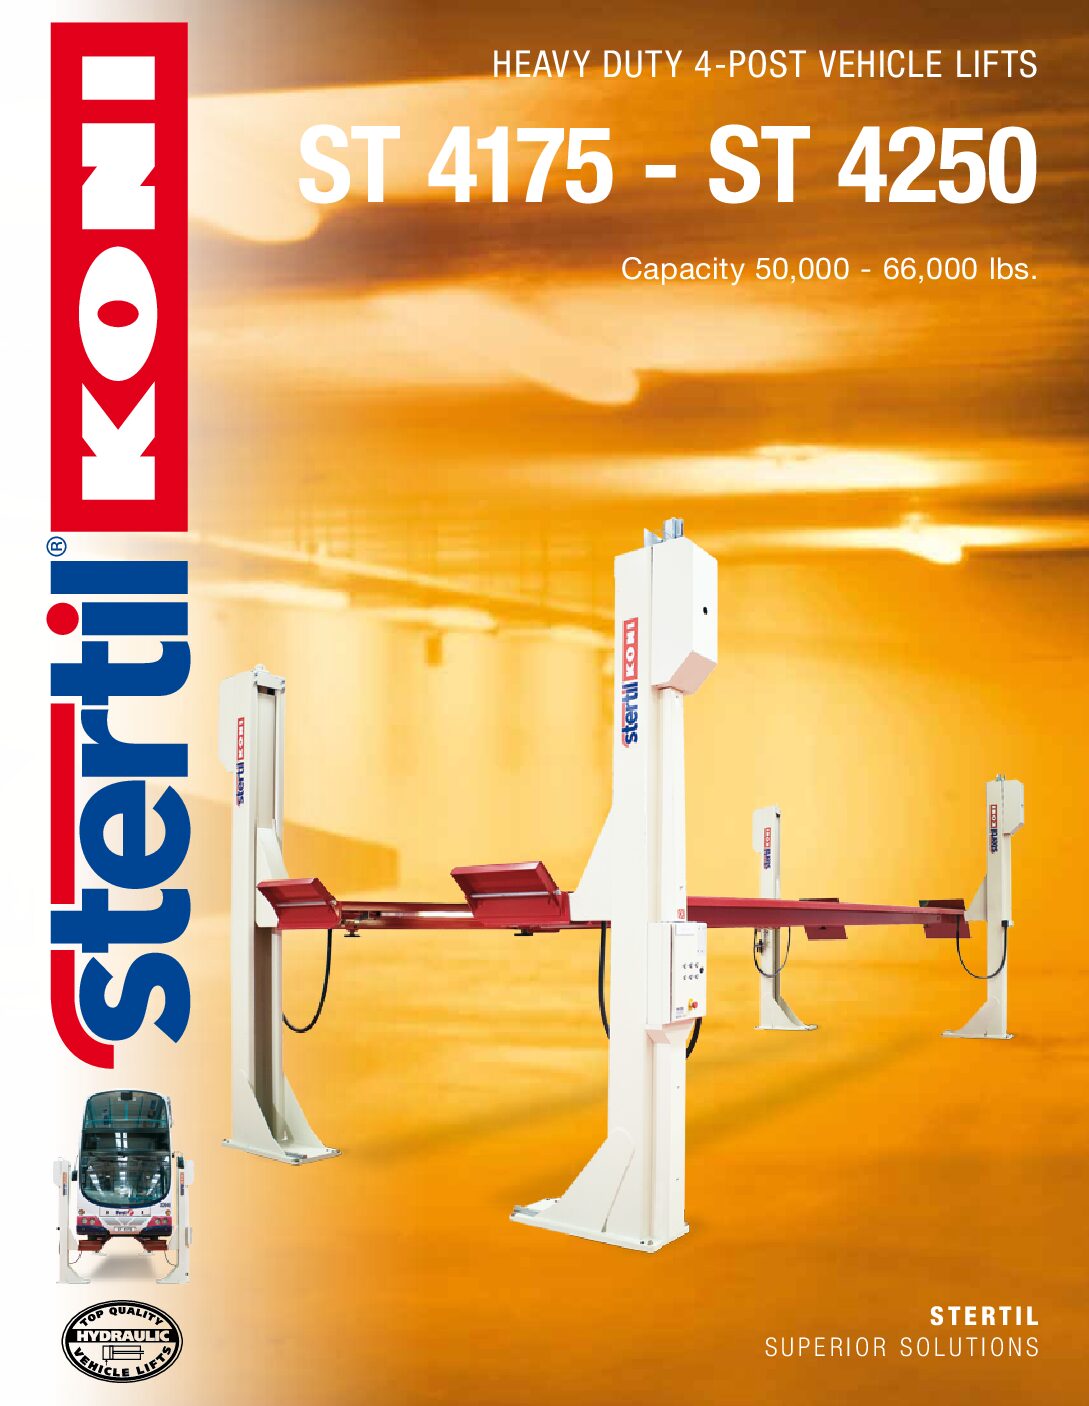 Stertil-Koni: ST 4175 and ST 4250 – US Version